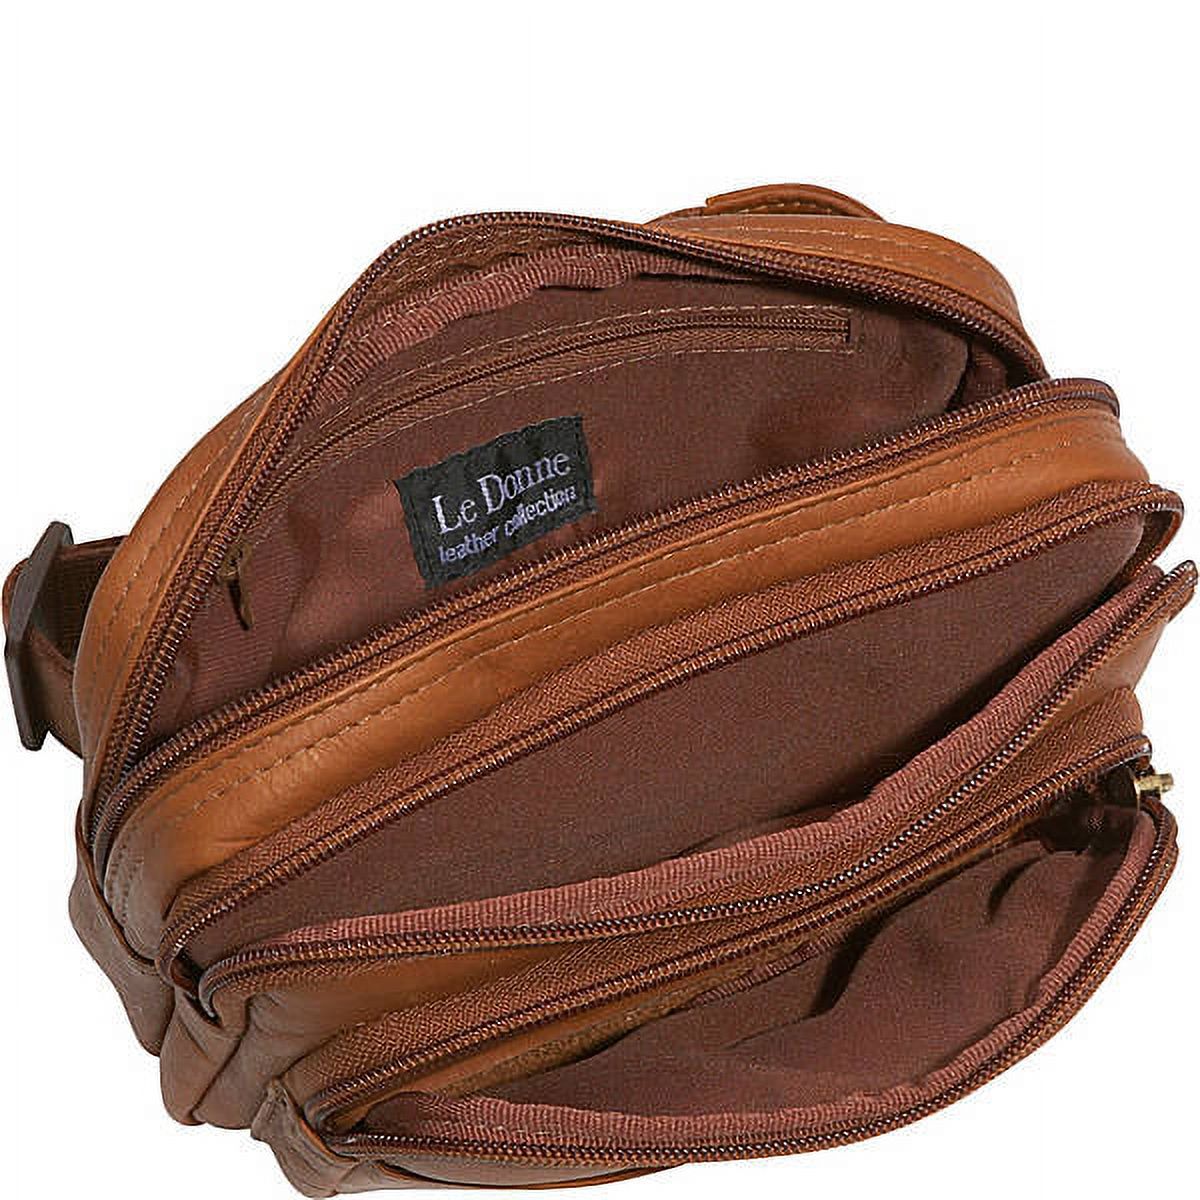 Le Donne Leather Four Compartment Waist Bag LD-9114 - image 2 of 4